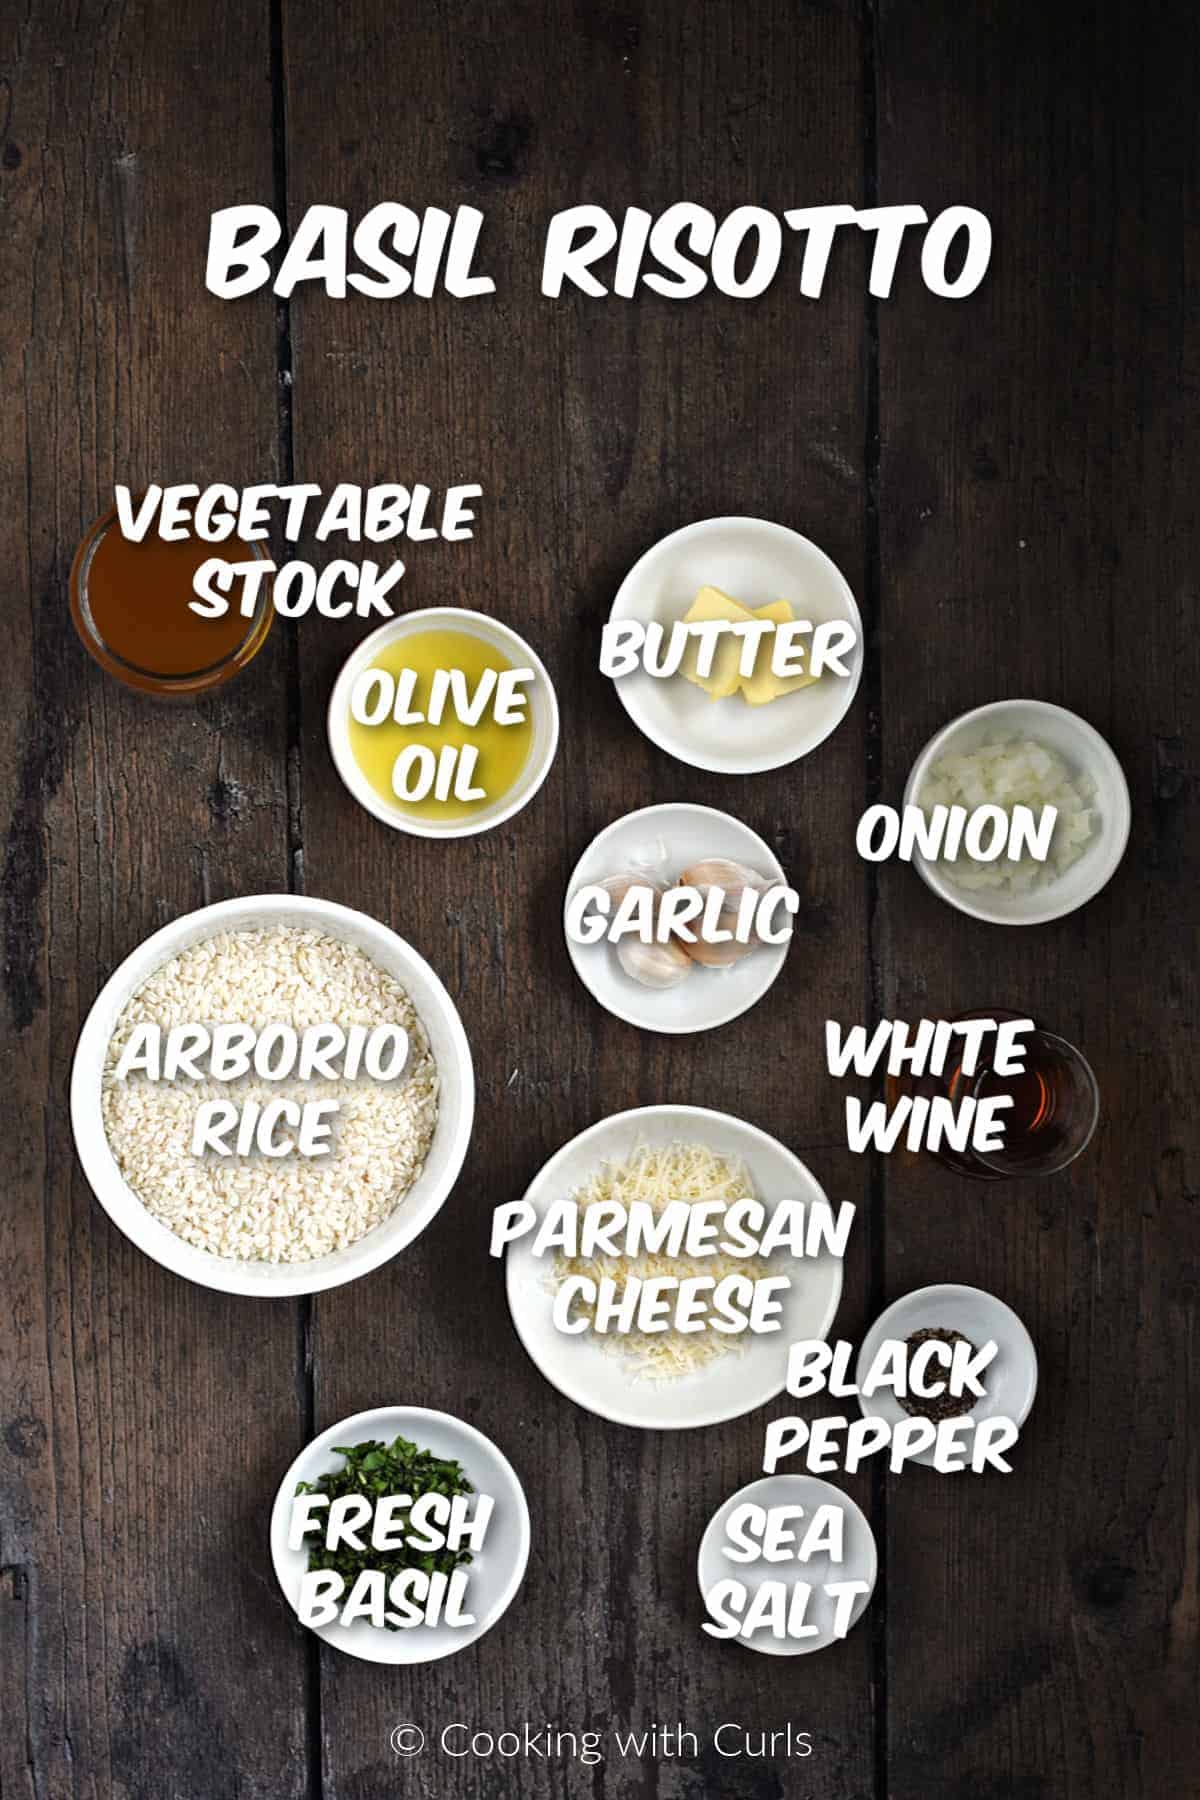 Ingredients to make basil risotto.